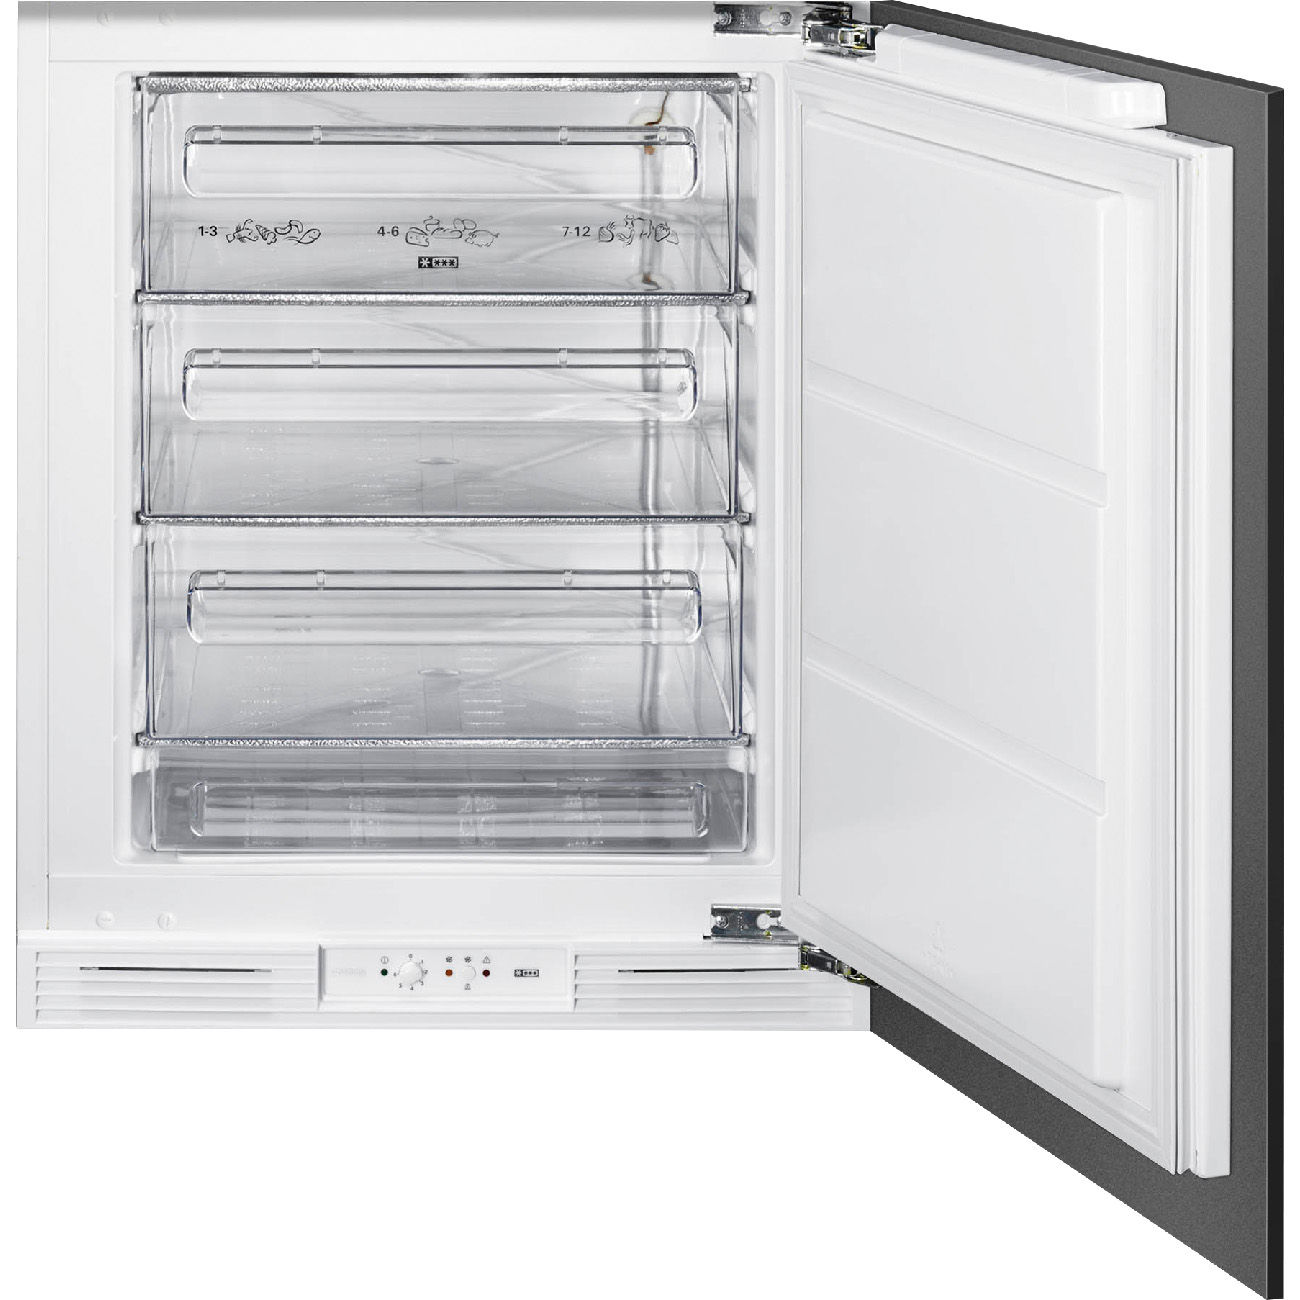 Under counter Built-in freezer- Smeg_1